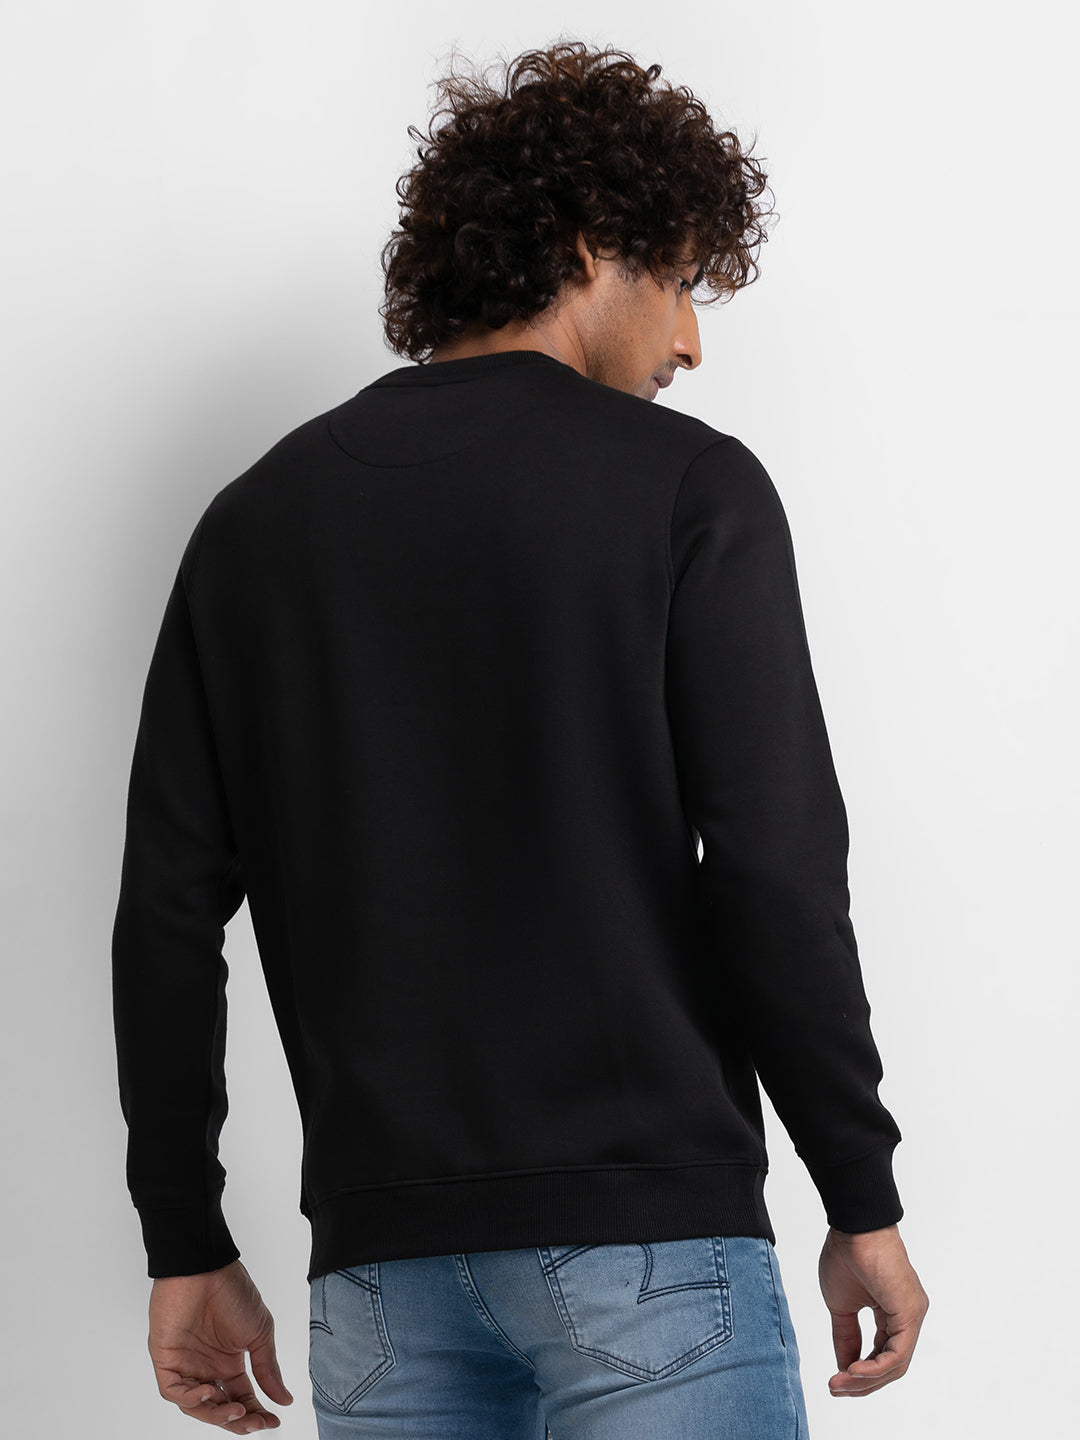 Spykar Black Cotton Full Sleeve Round Neck Sweatshirt For Men